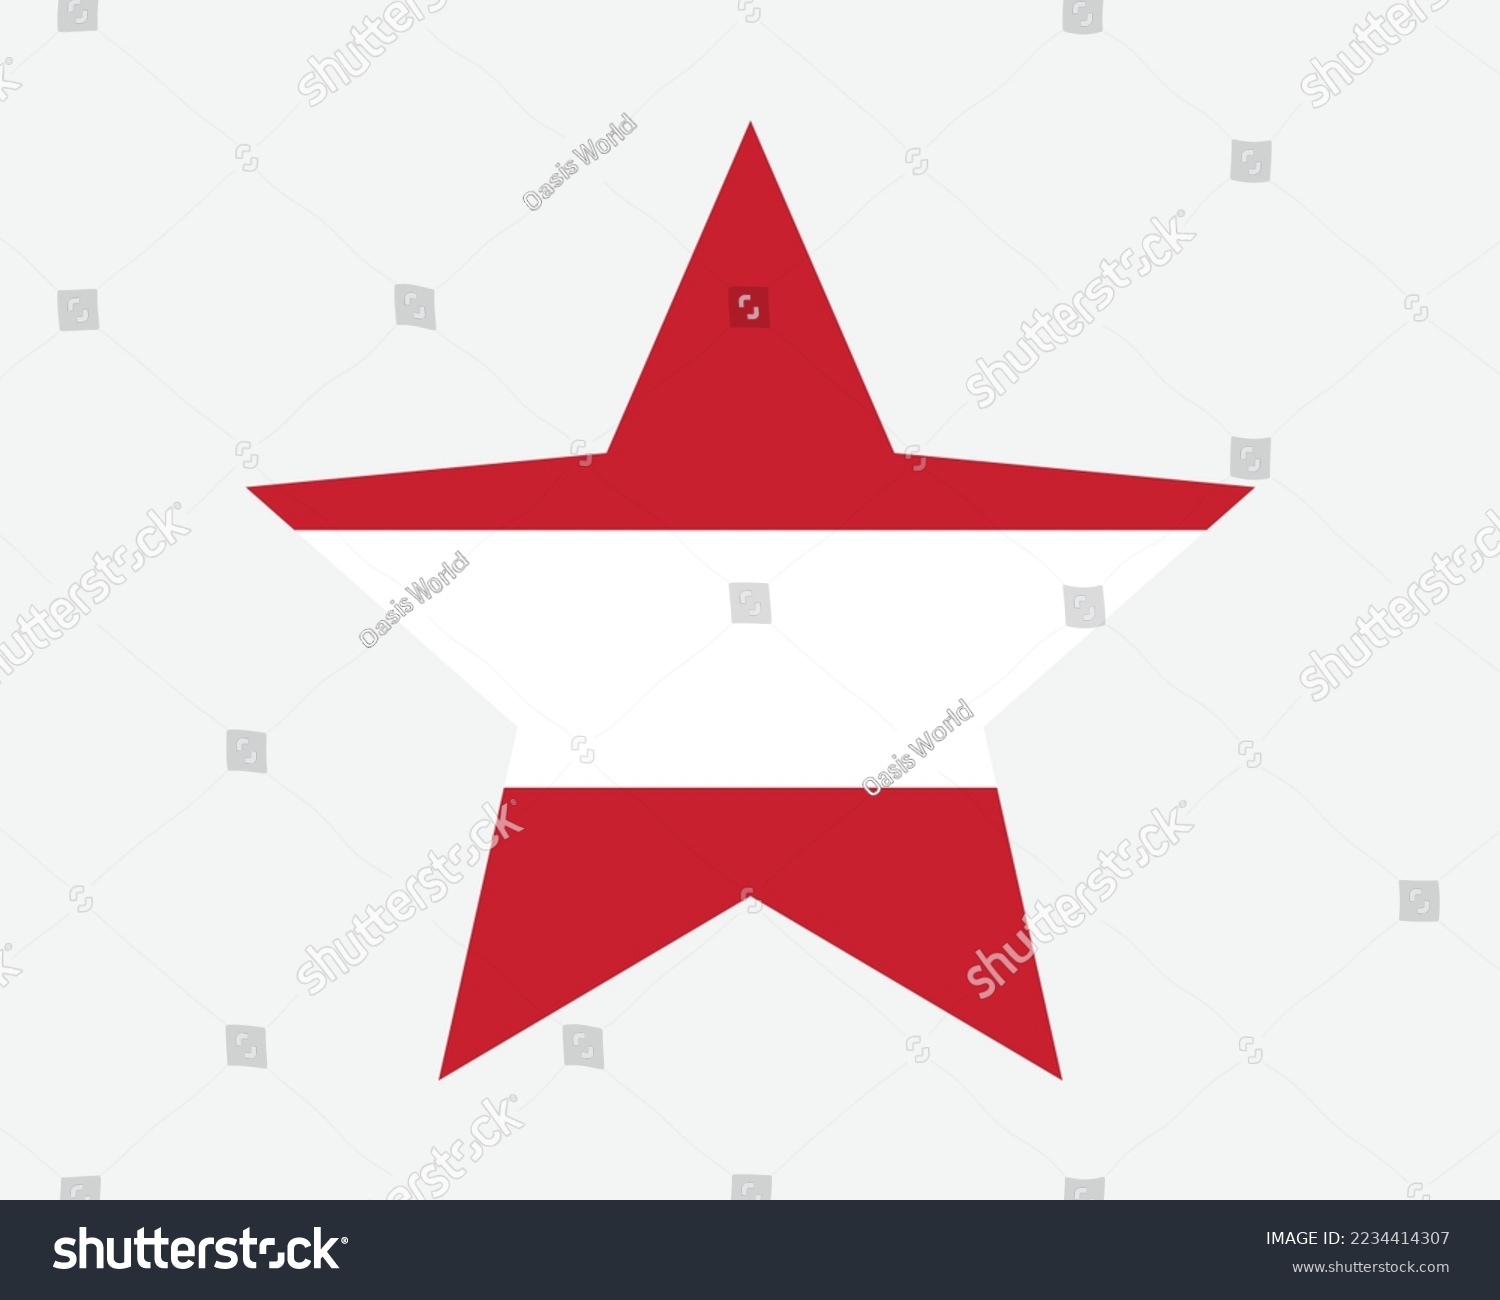 SVG of Austria Star Flag. Austrian Star Shape Flag. Country National Banner Icon Symbol Vector 2D Flat Artwork Graphic Illustration svg